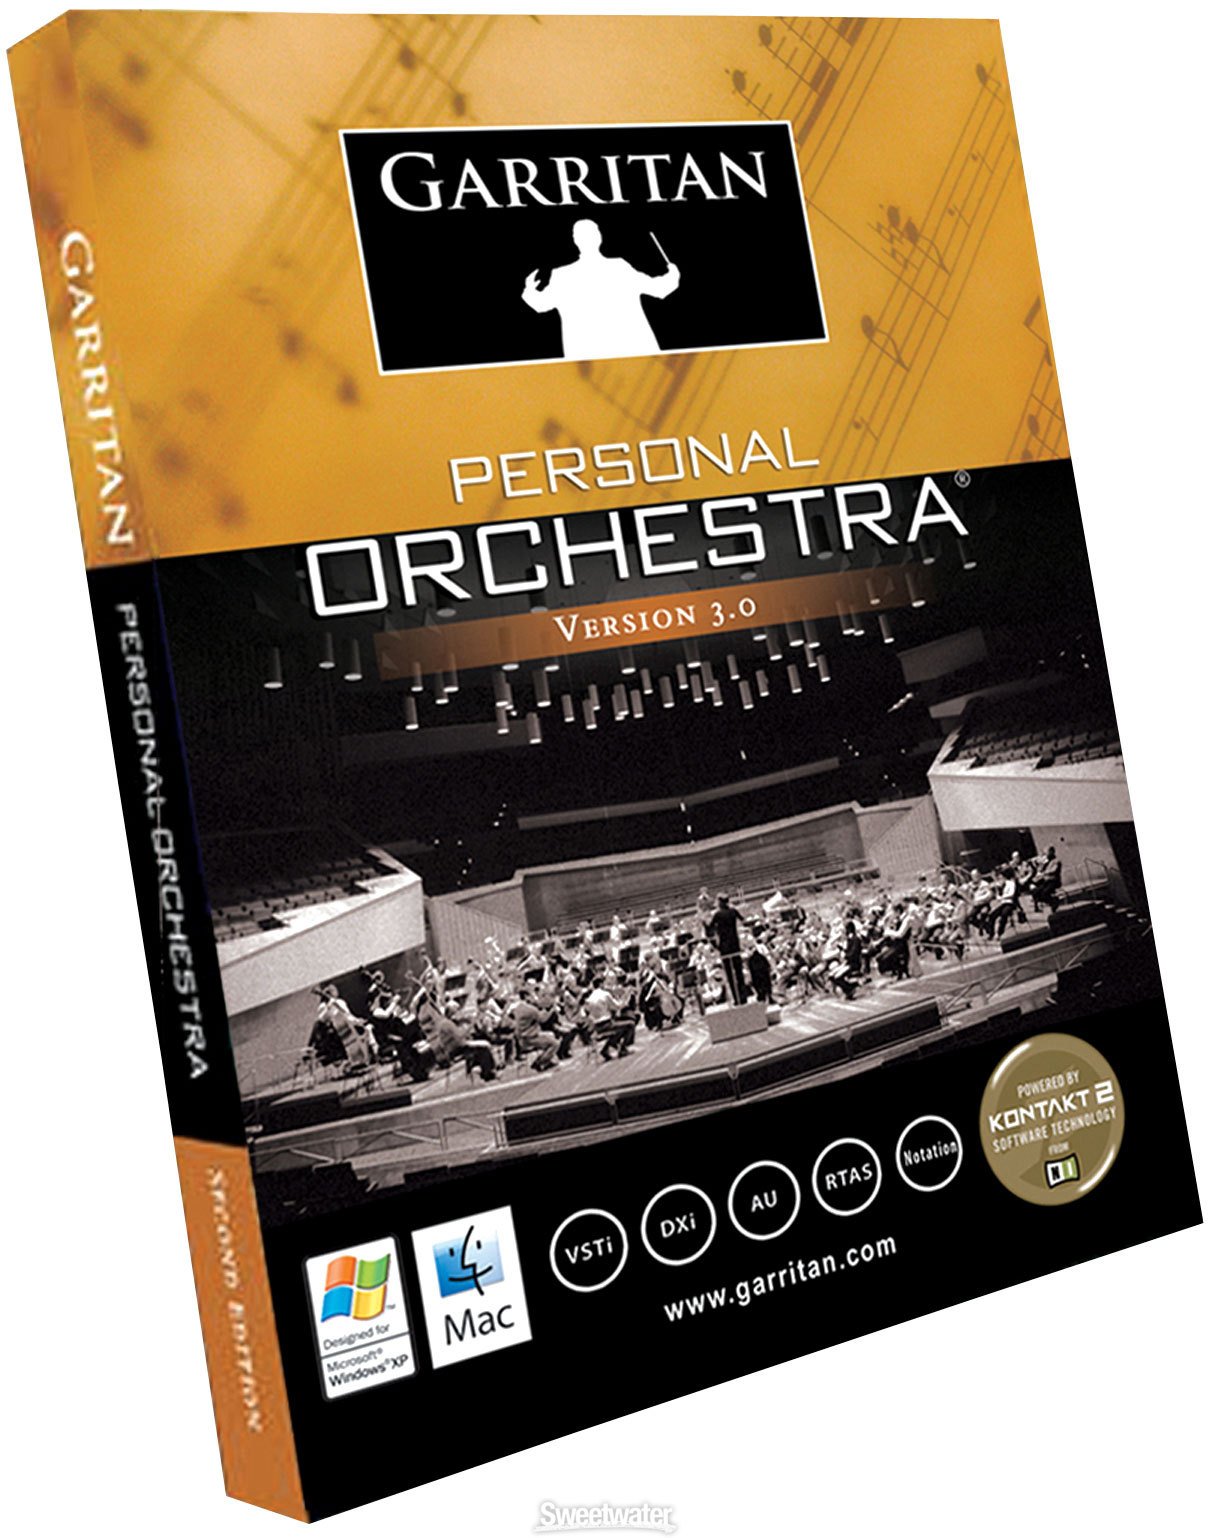 garritan personal orchestra 5 requirements